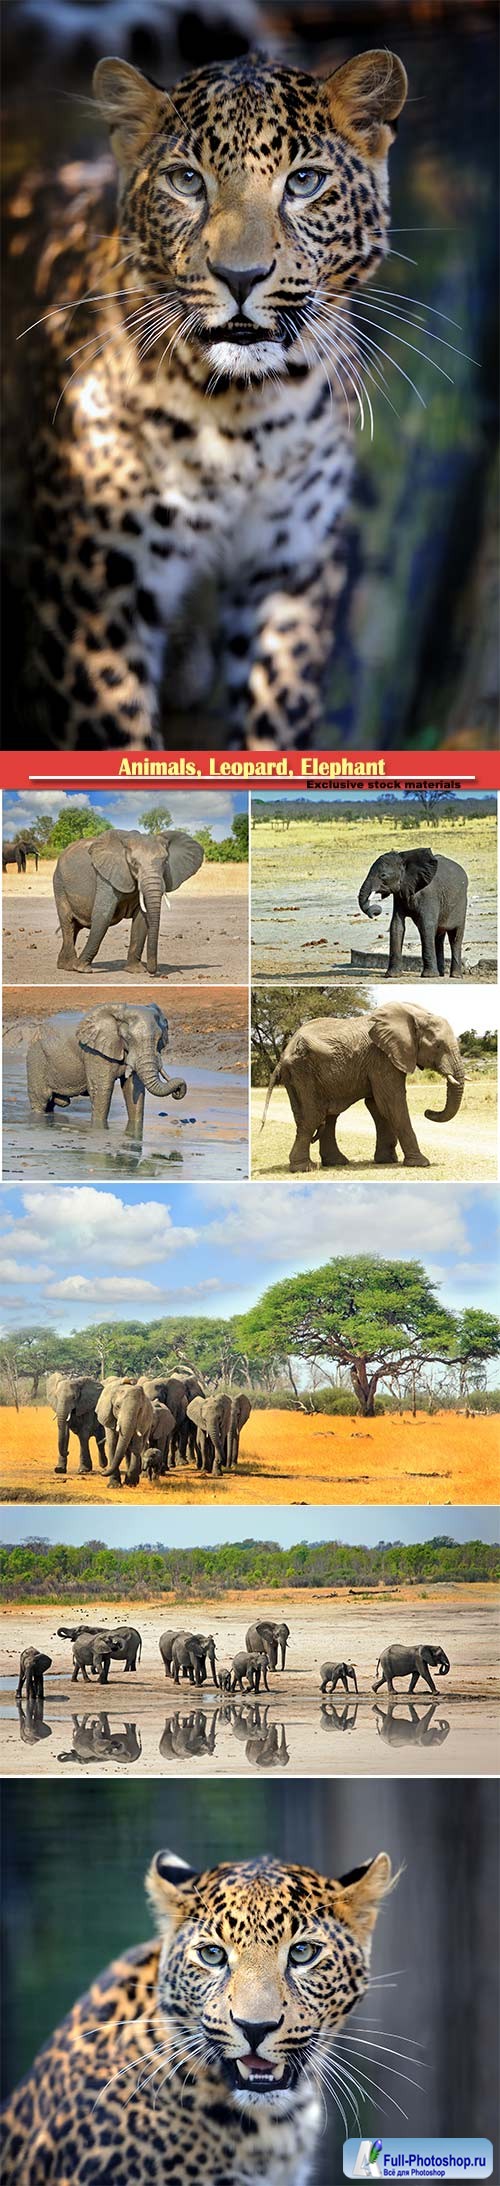 Animals, Leopard, Elephant